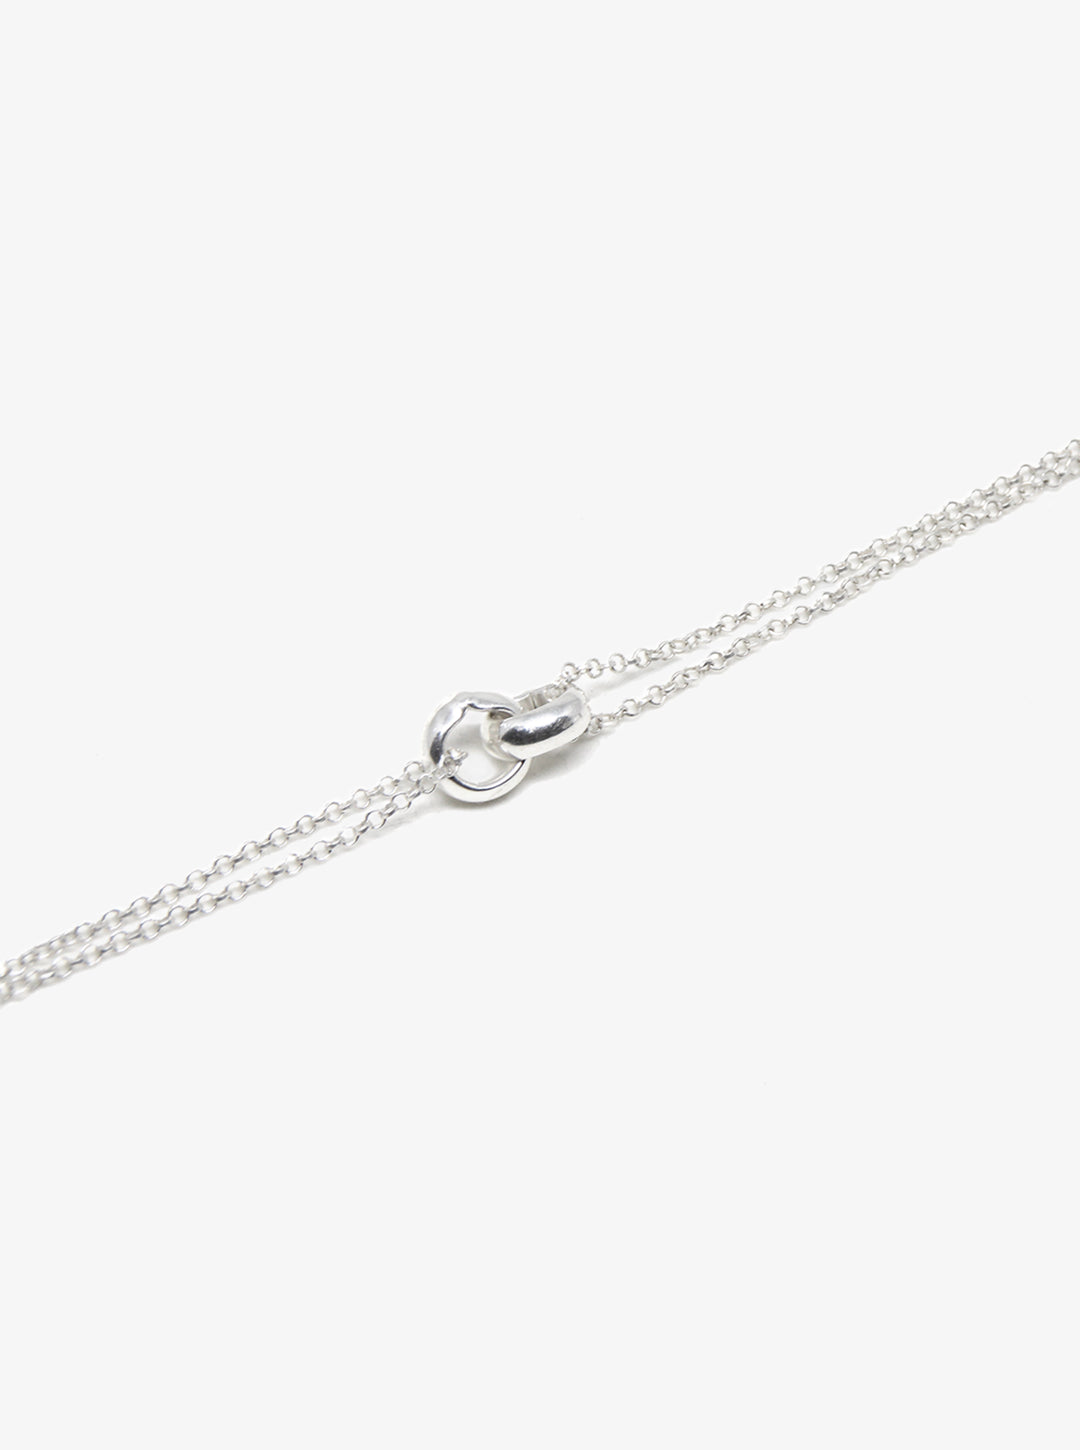 llayers-mens-women-jewelry-silver-chain-bracelet-infinity-newyork-brooklyn-F2